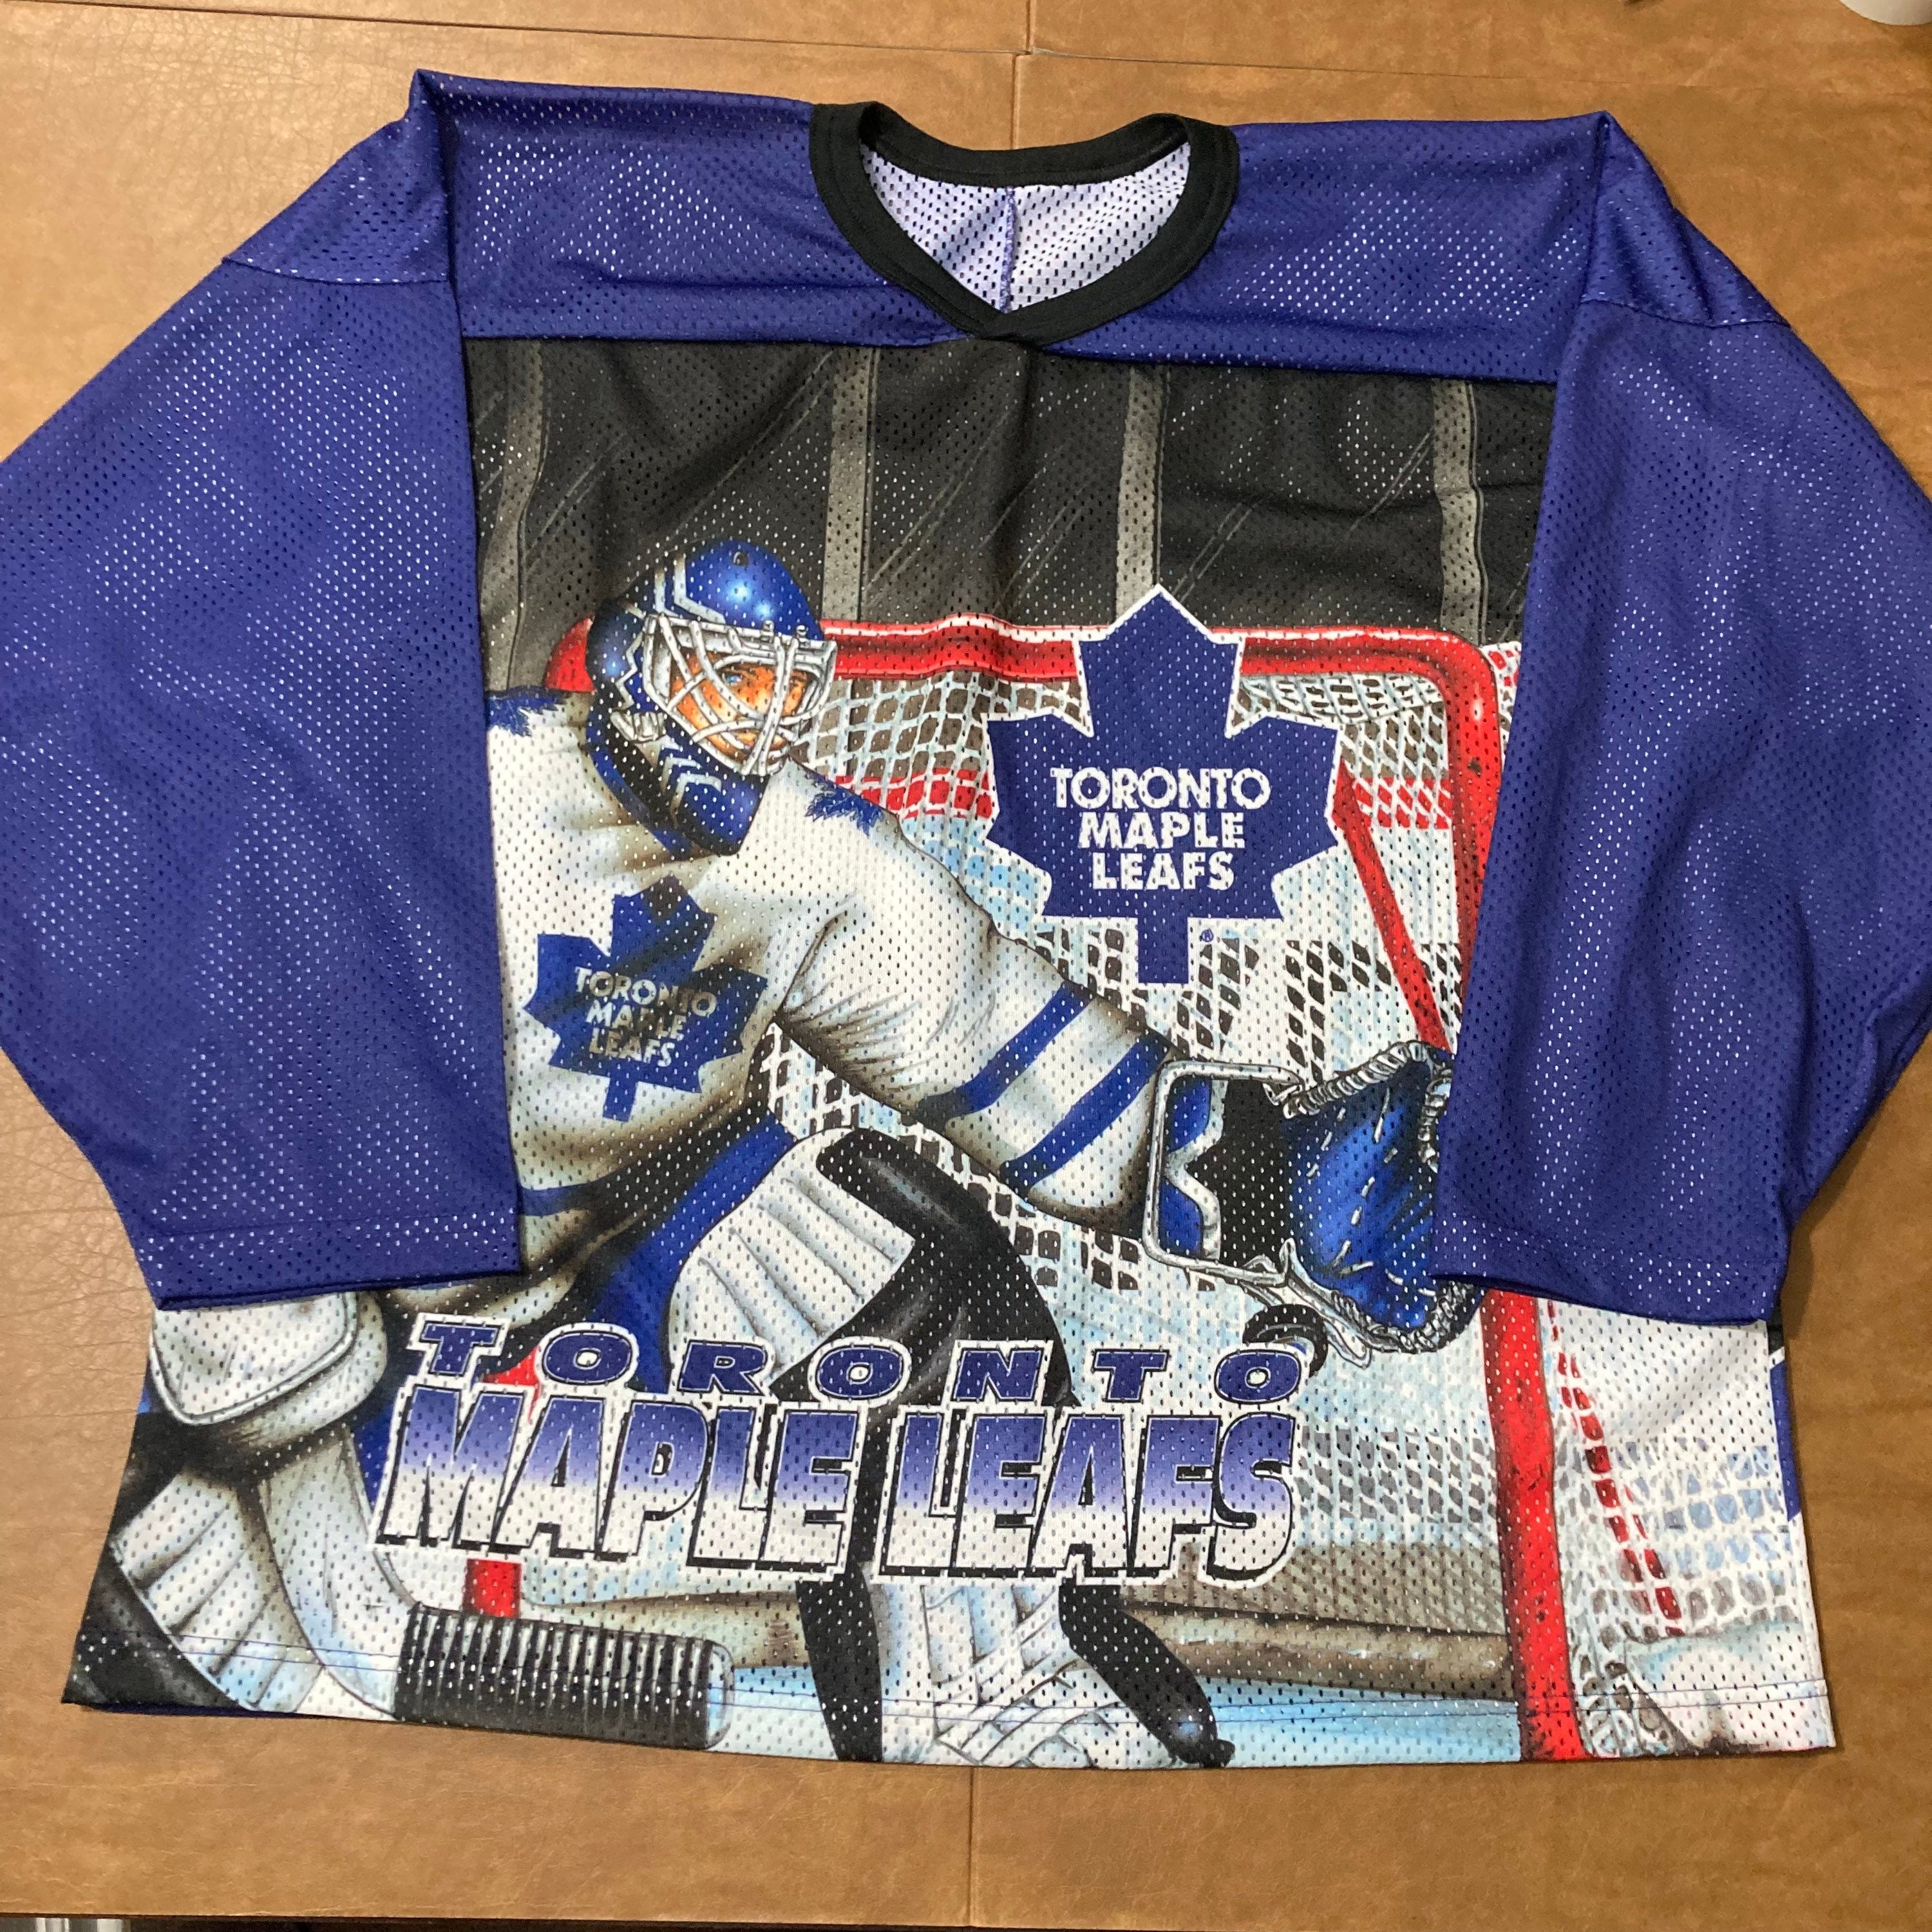 Nhl Toronto Maple Leafs Hockey Jersey As-is